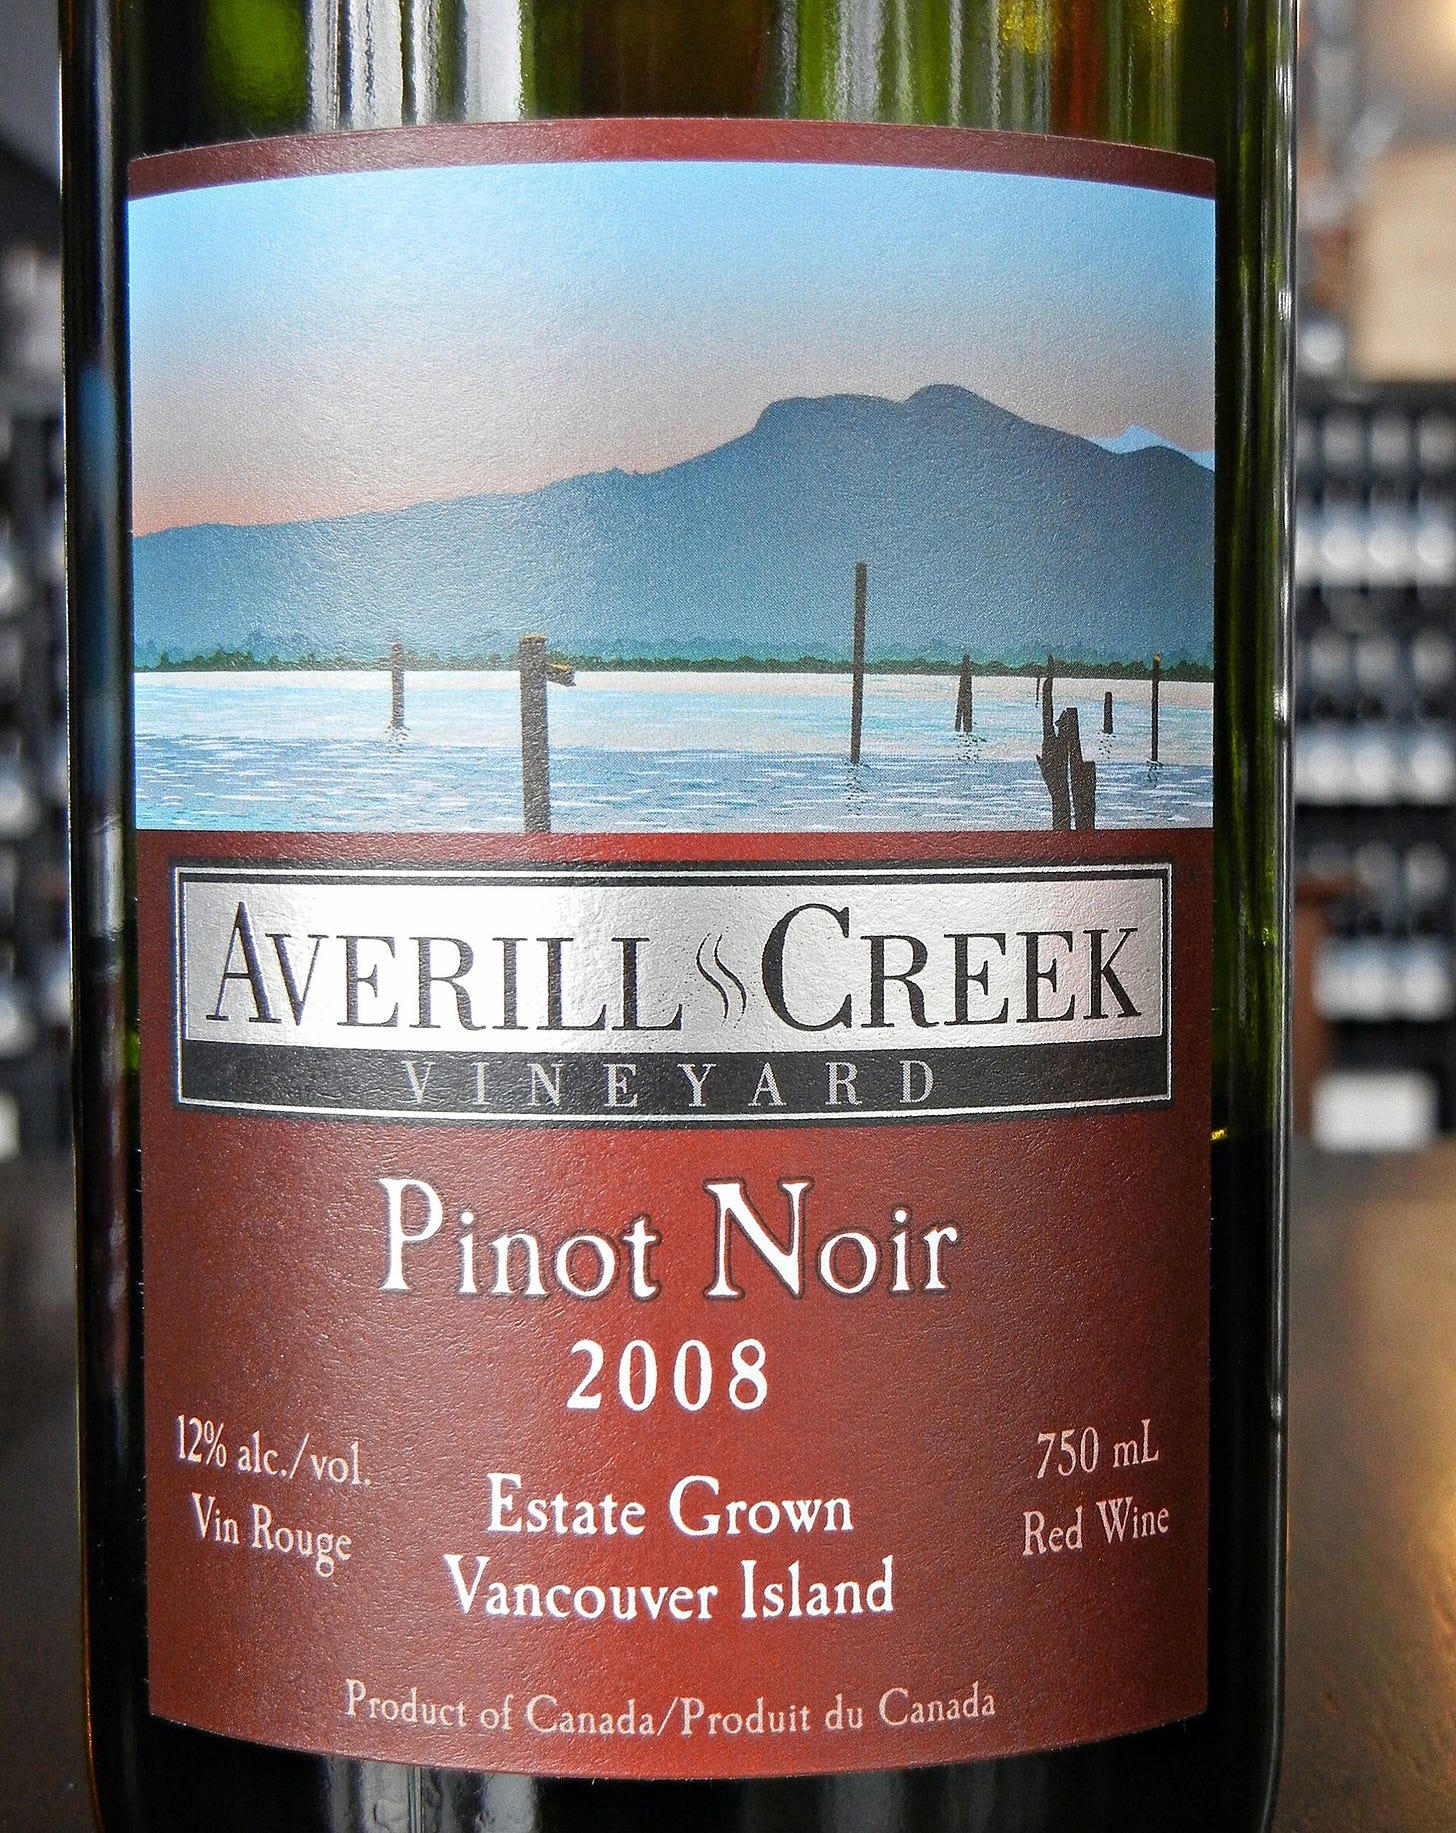 Averill Creek Pinot Noir 2008 Label - BC Pinot Noir Tasting Review 24